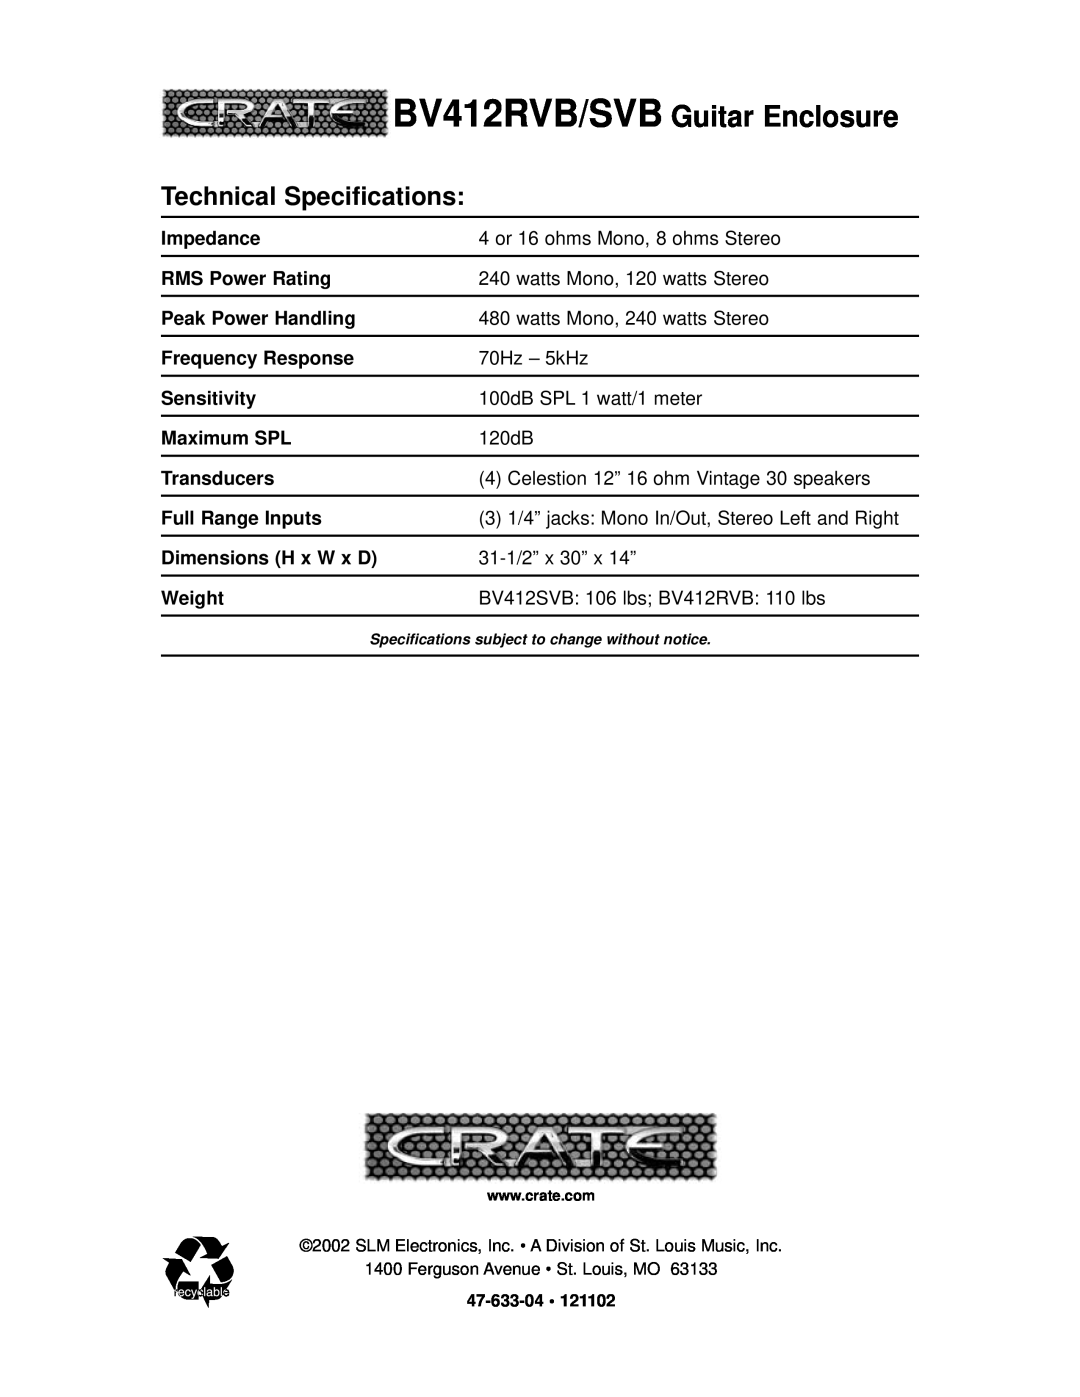 Crate Amplifiers BV412SVB manual BV412RVB/SVB Guitar Enclosure, Technical Specifications 